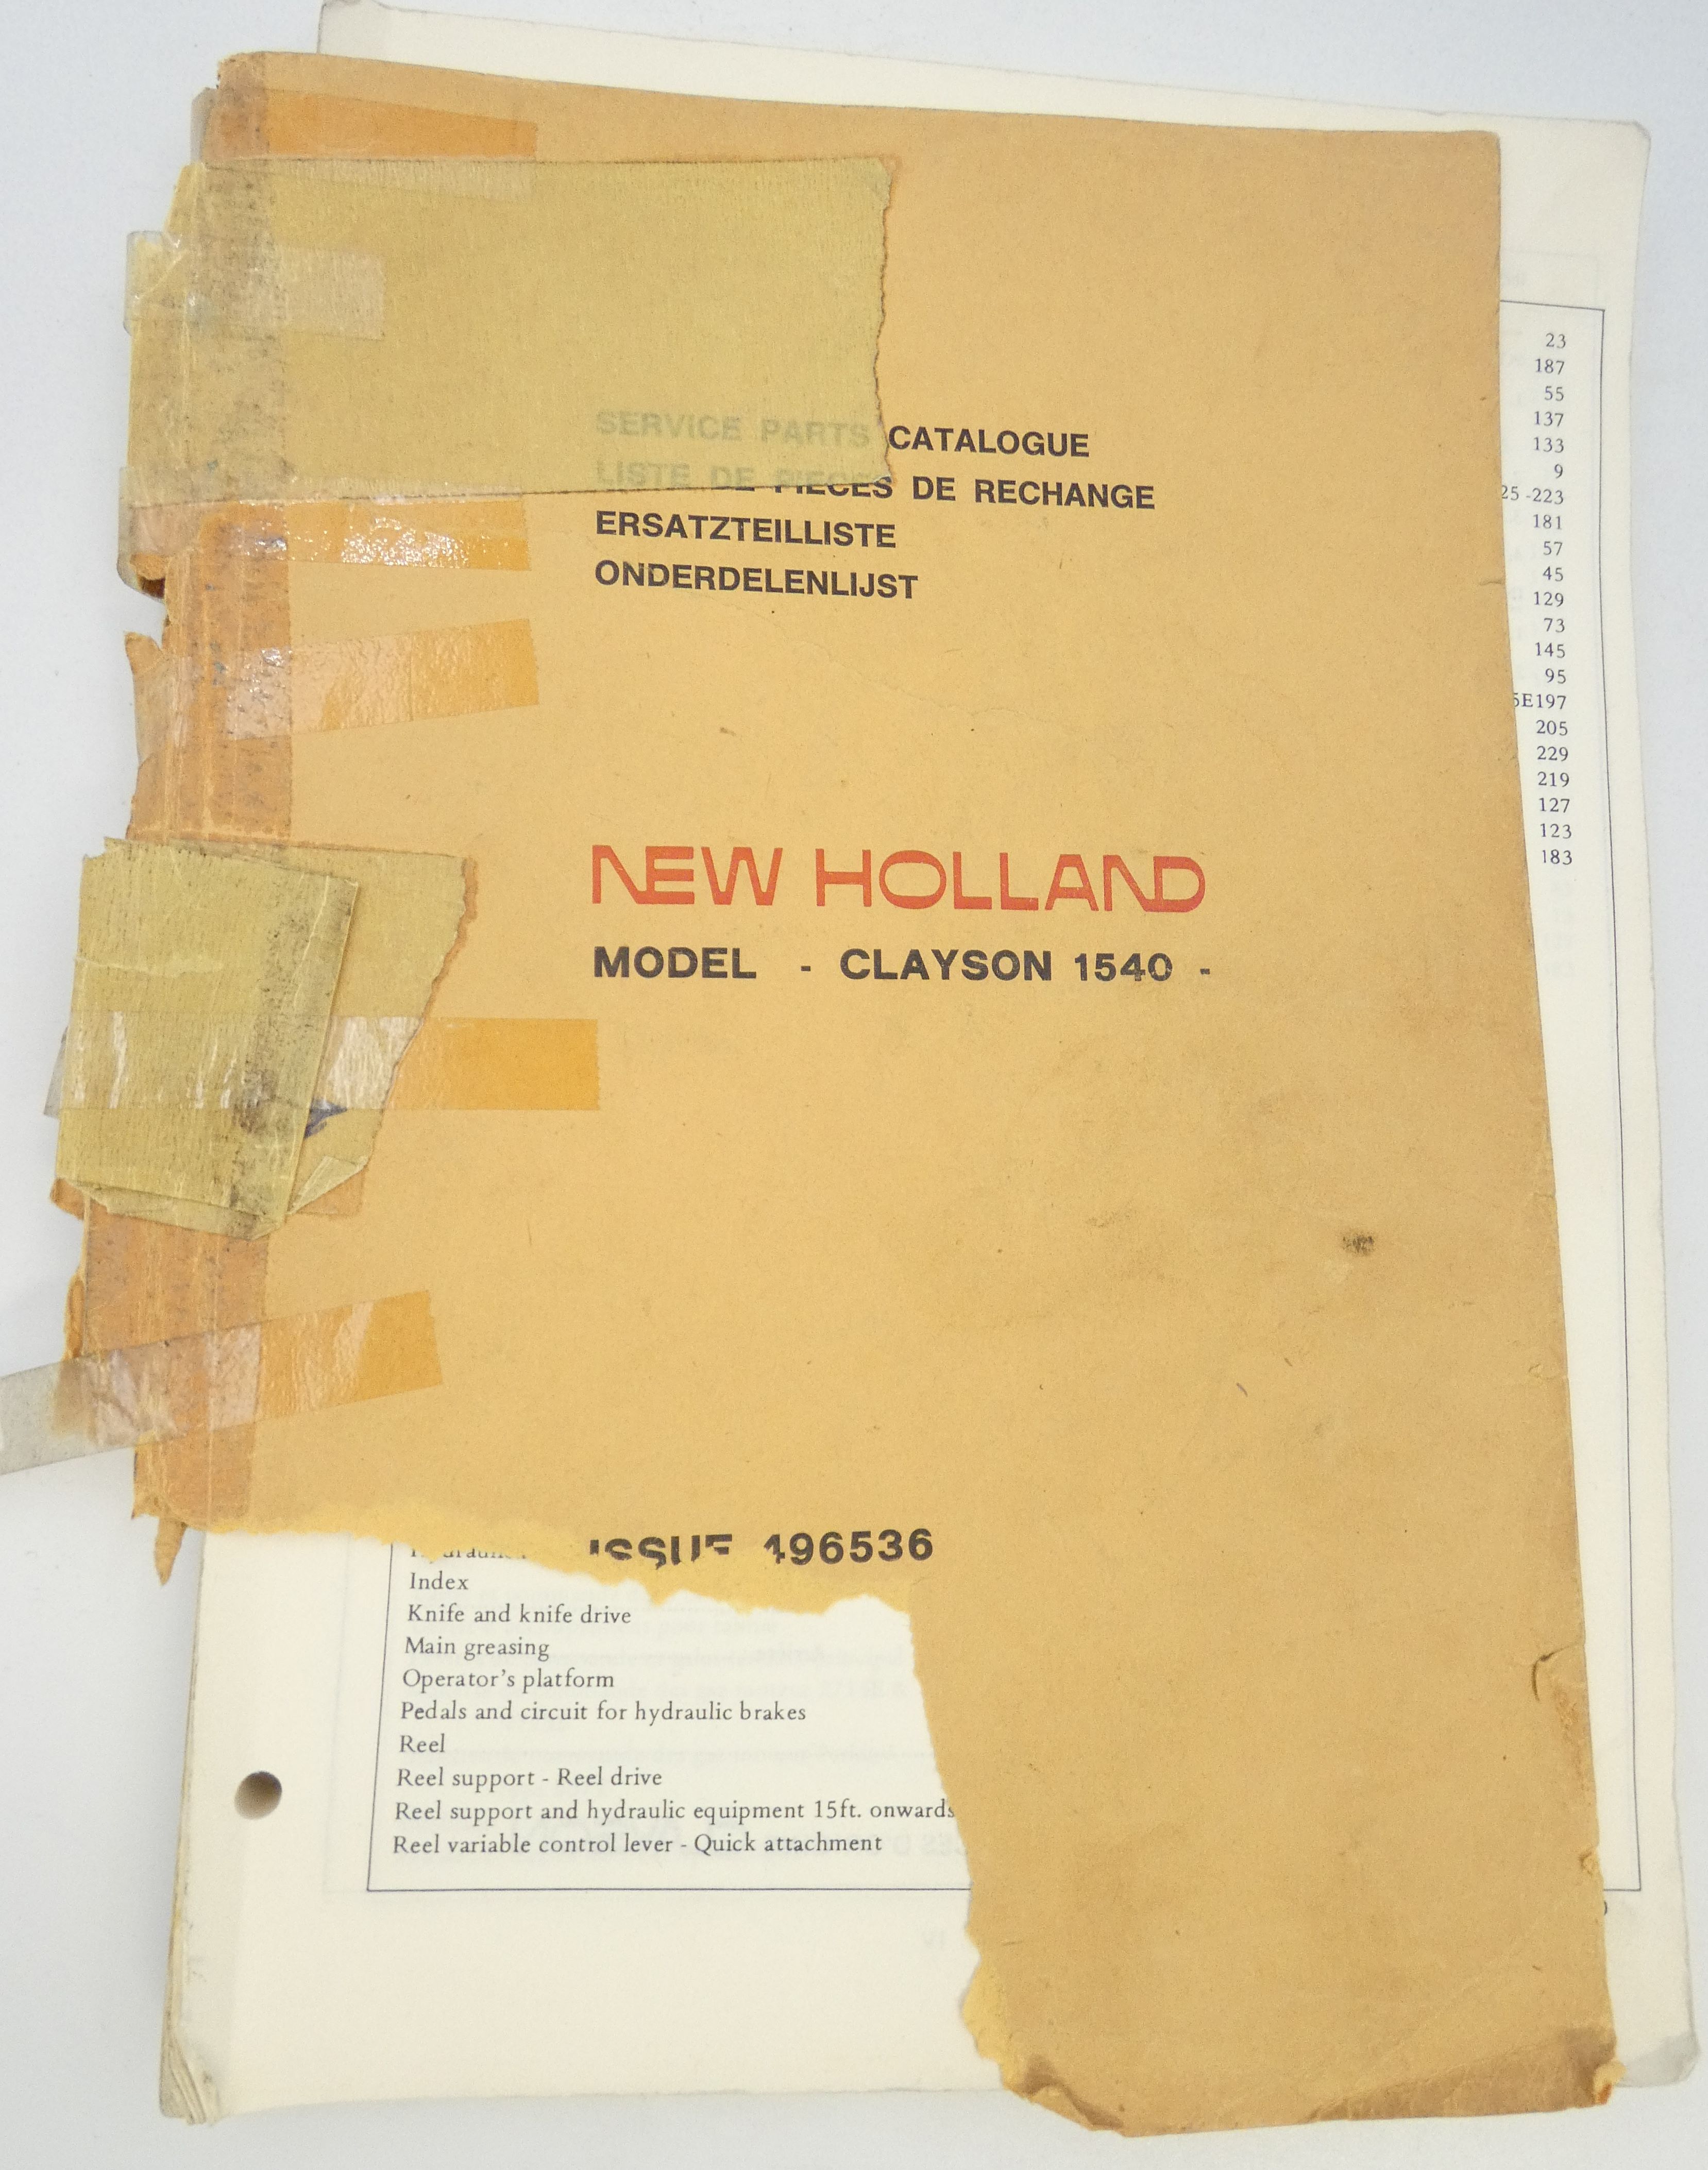 New Holland Model Clayson 1540 service parts catalogue